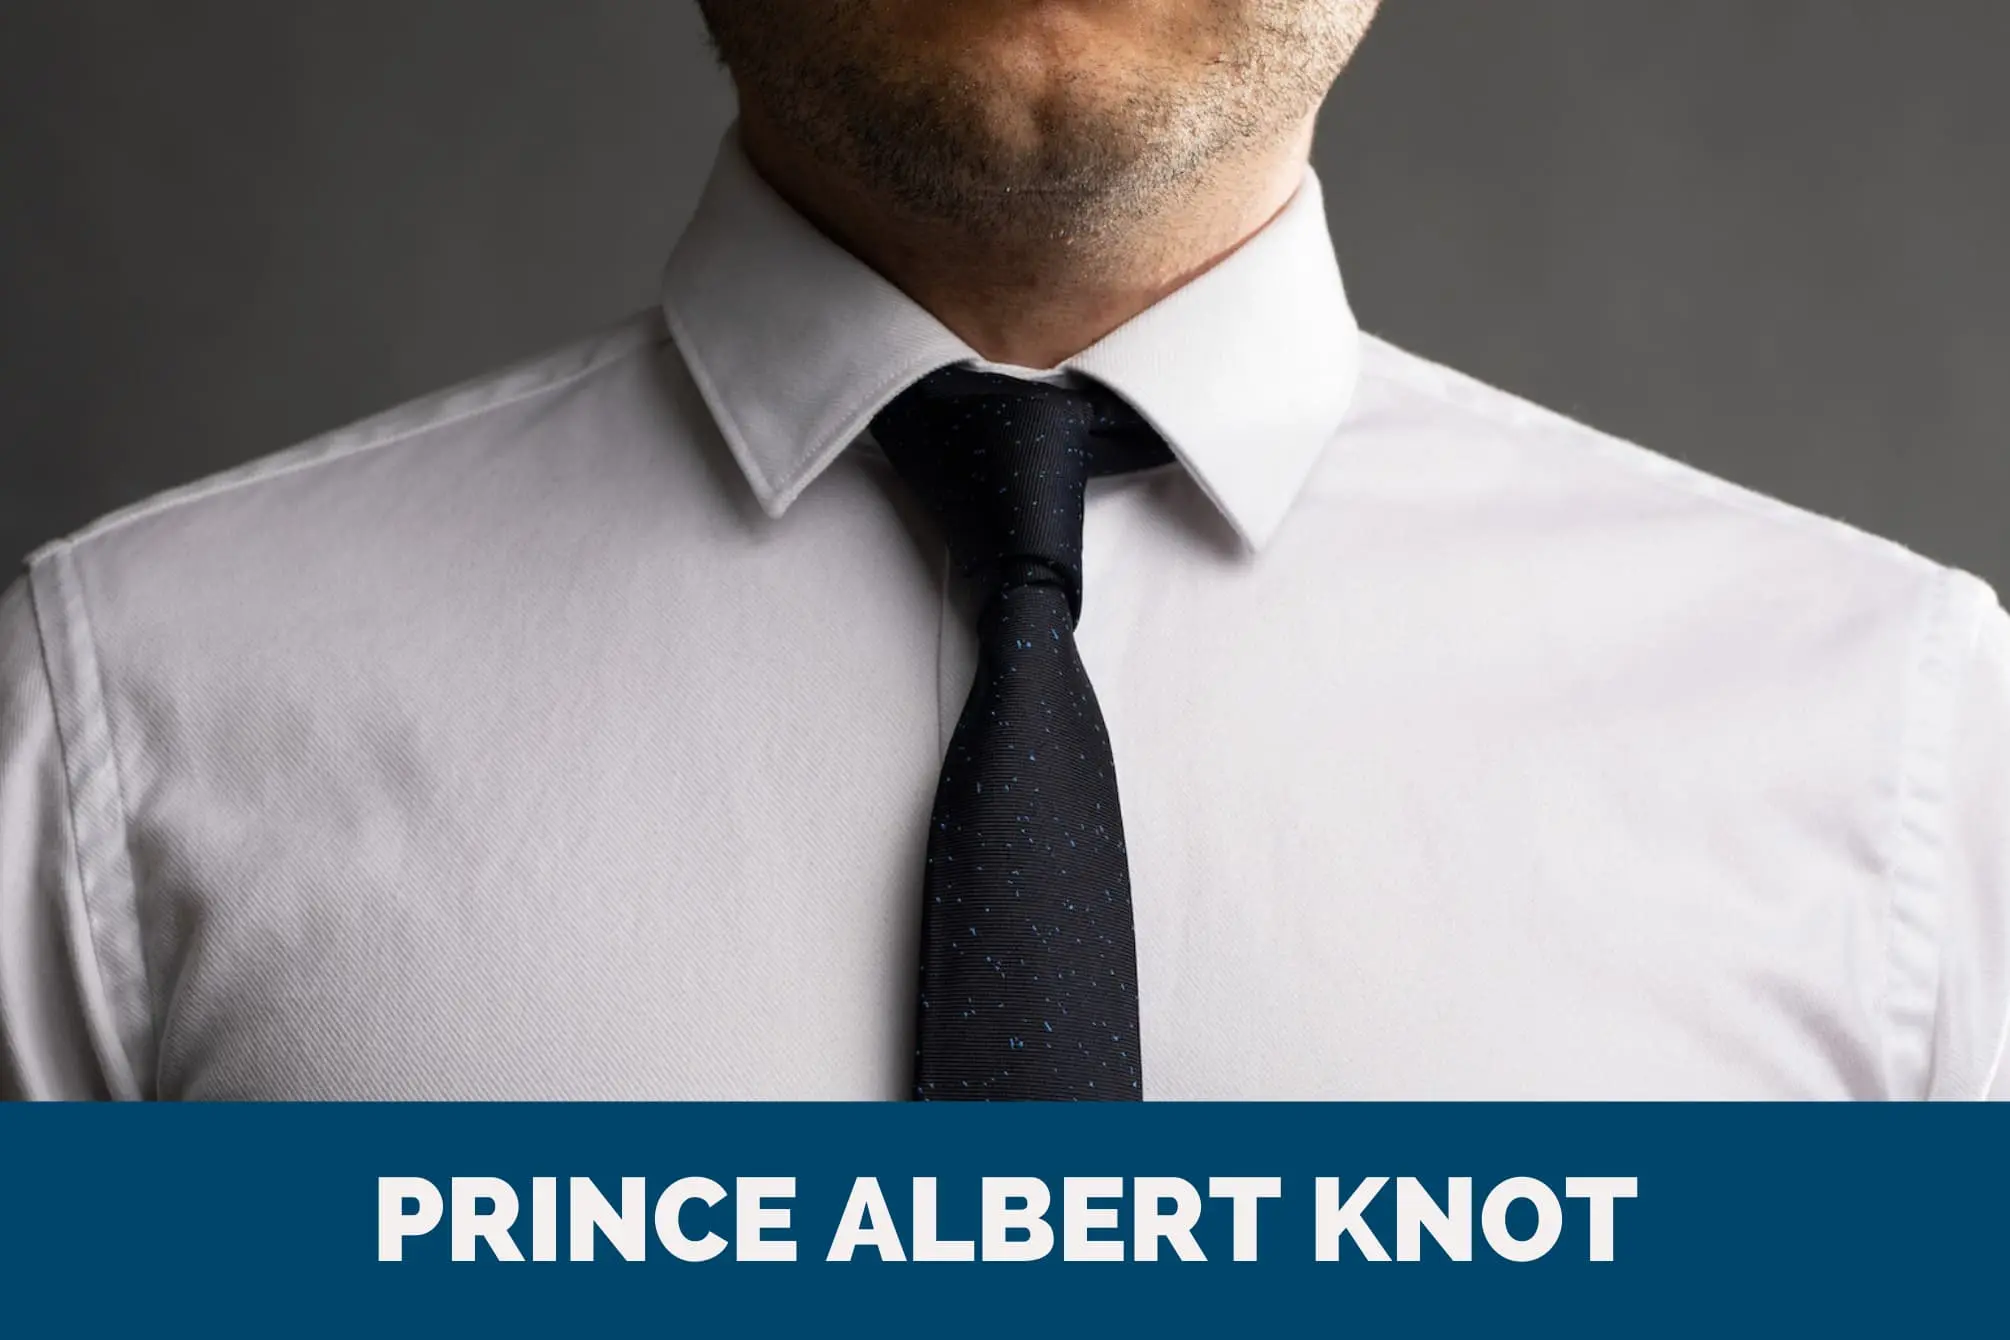 Prince Albert Knot